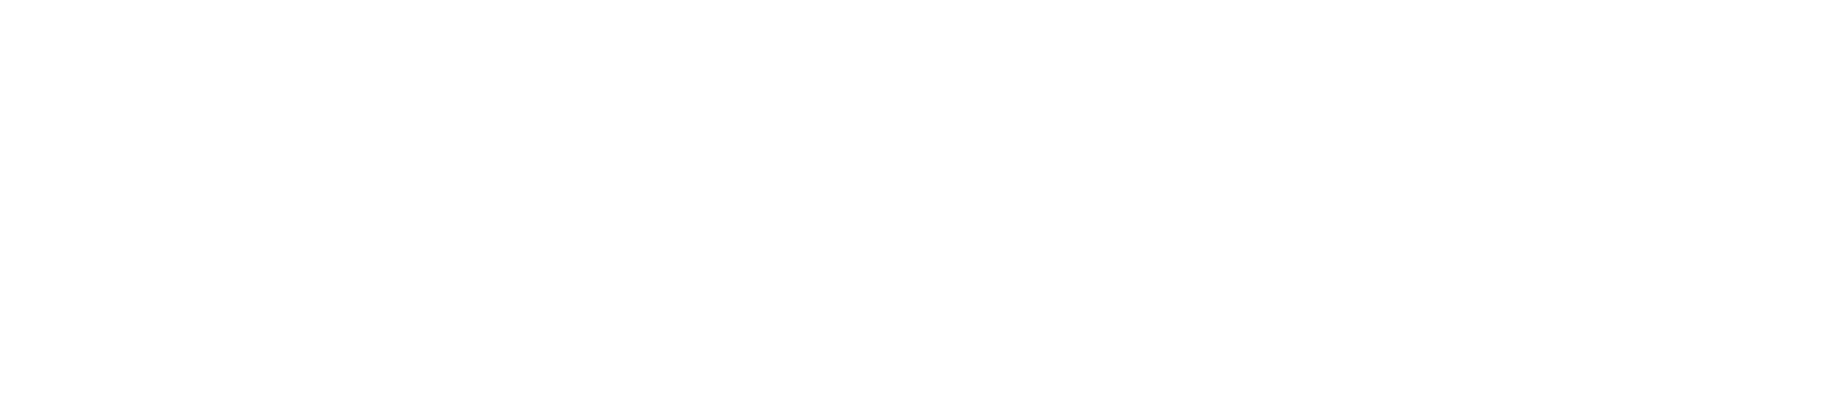 Bracalente Manufacturing Group kubvira 1950